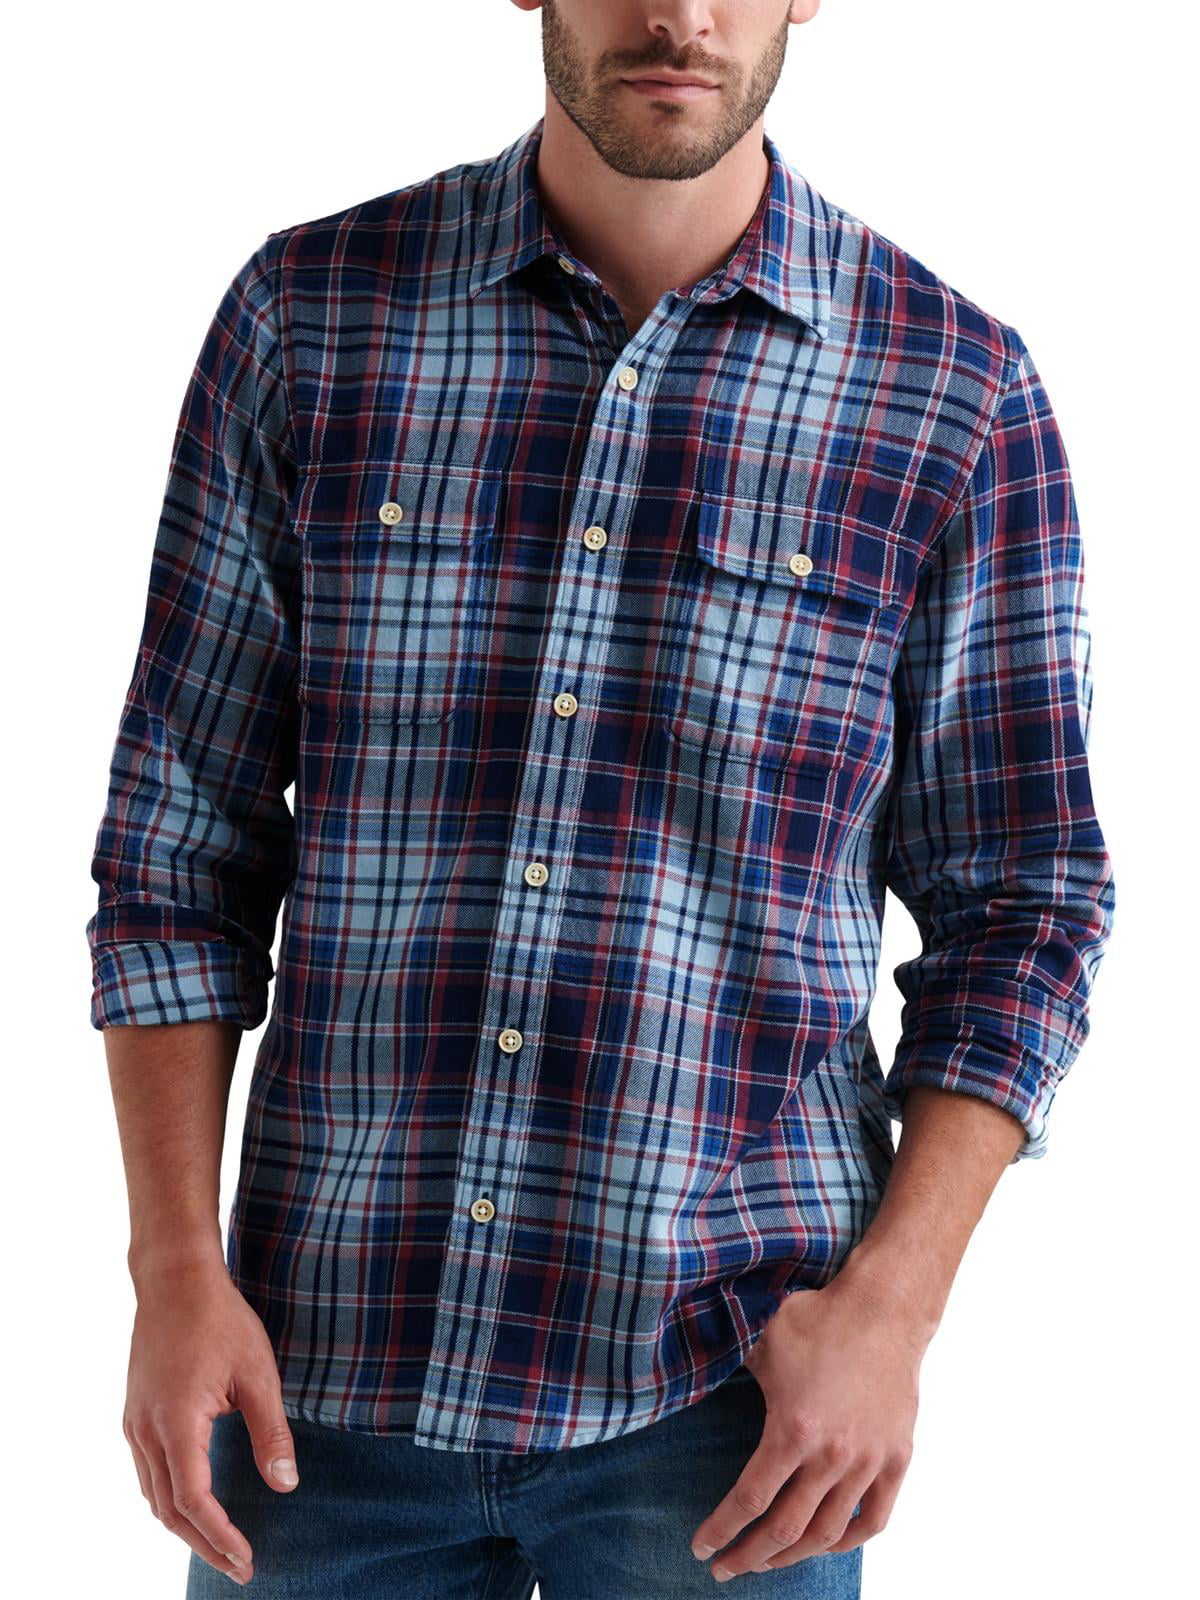 Lucky Brand Men's Two-Pocket Workwear Plaid Shirt (Blue Plaid